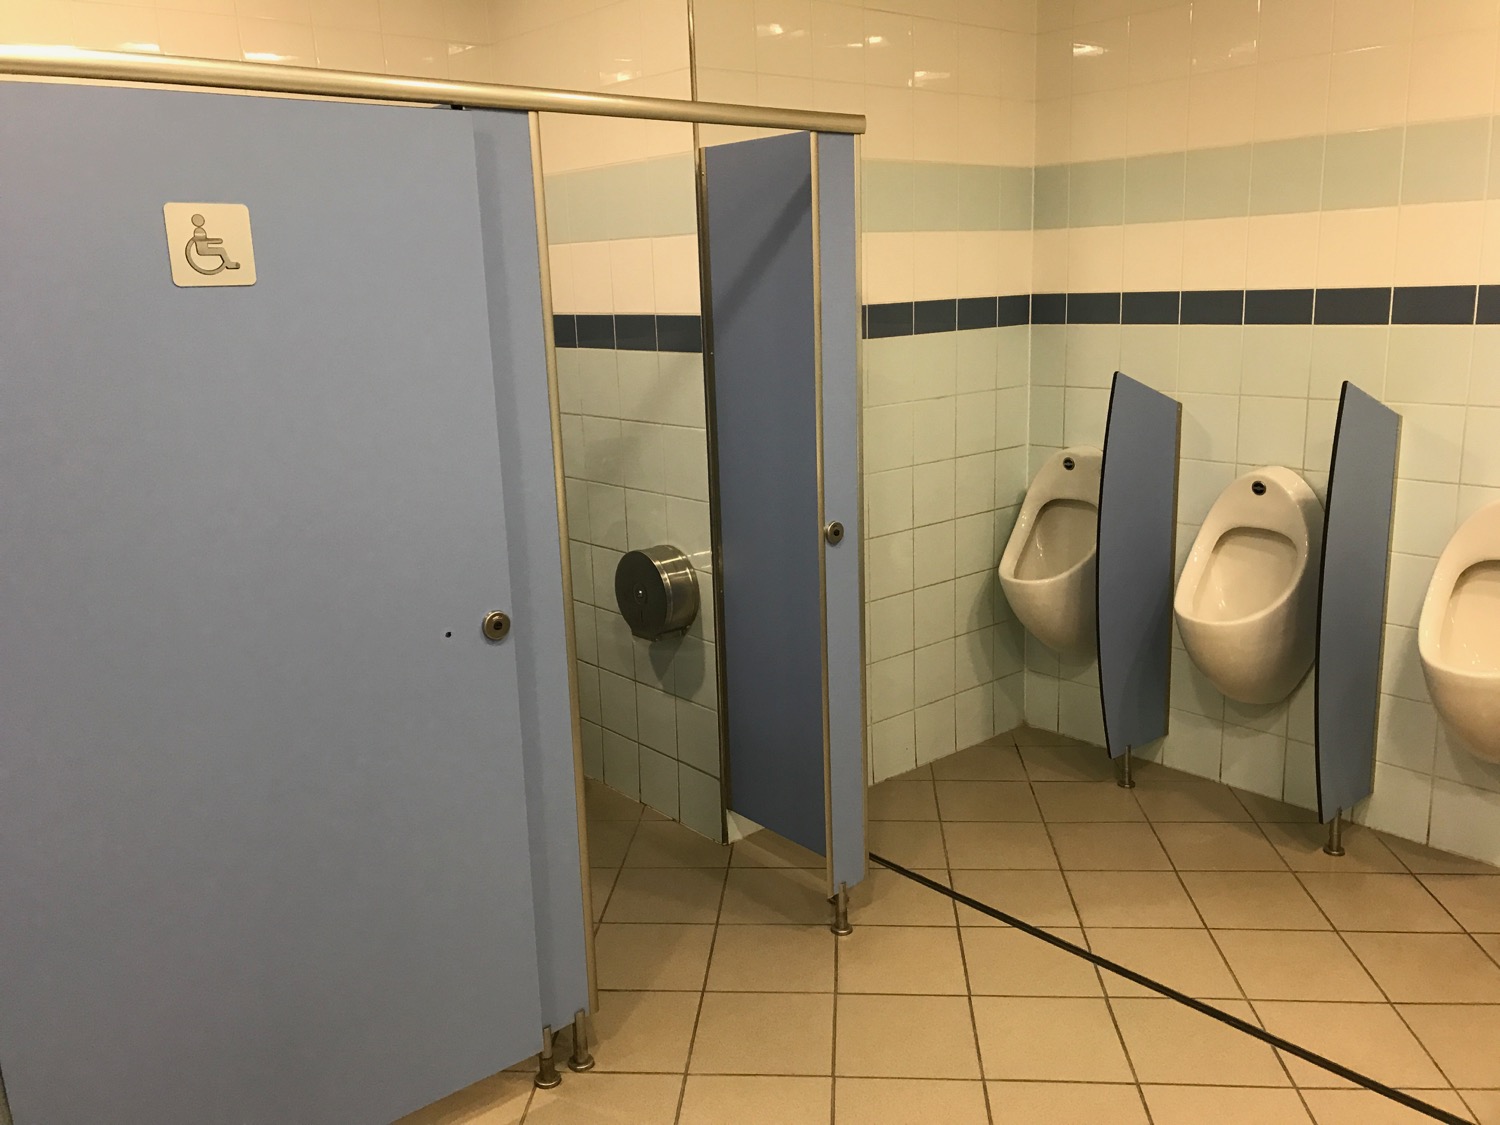 a bathroom with urinals and a blue door